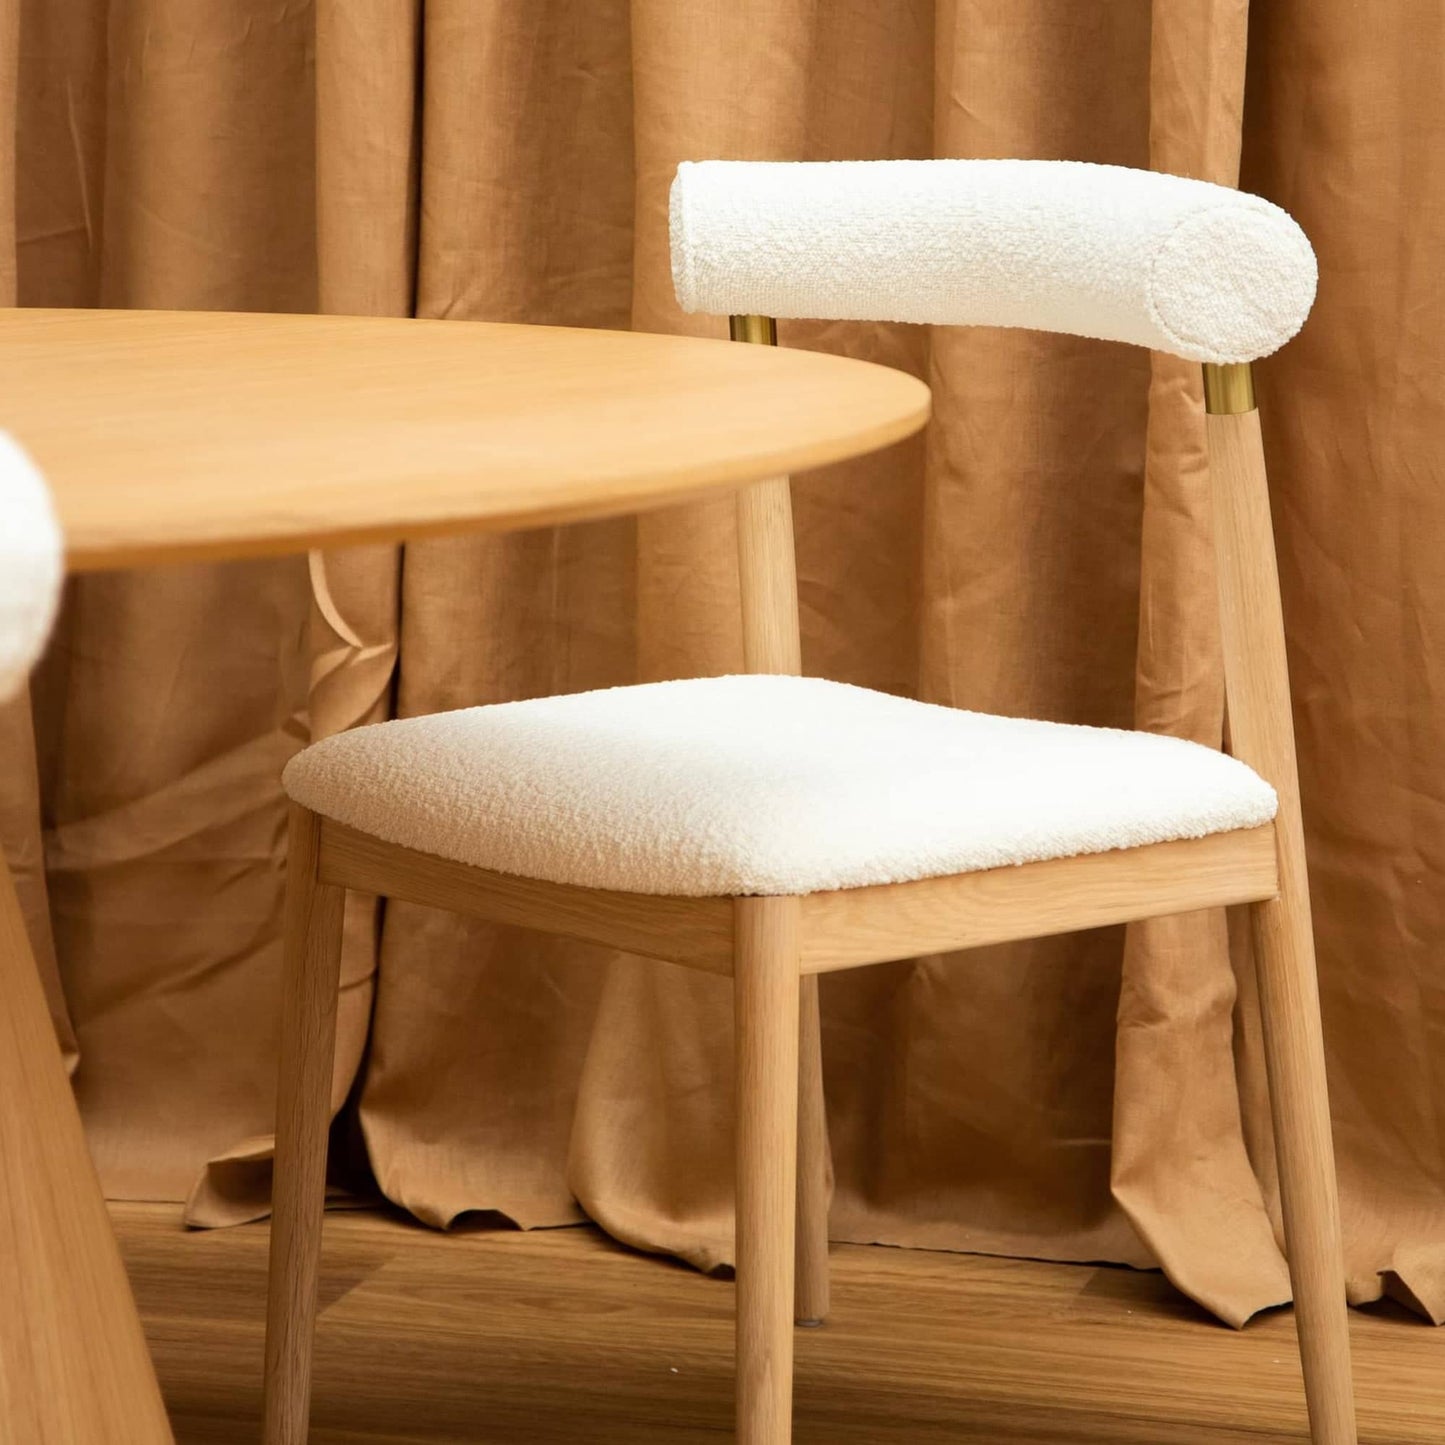 Cluster Dining Chair - Copenhagen Off White